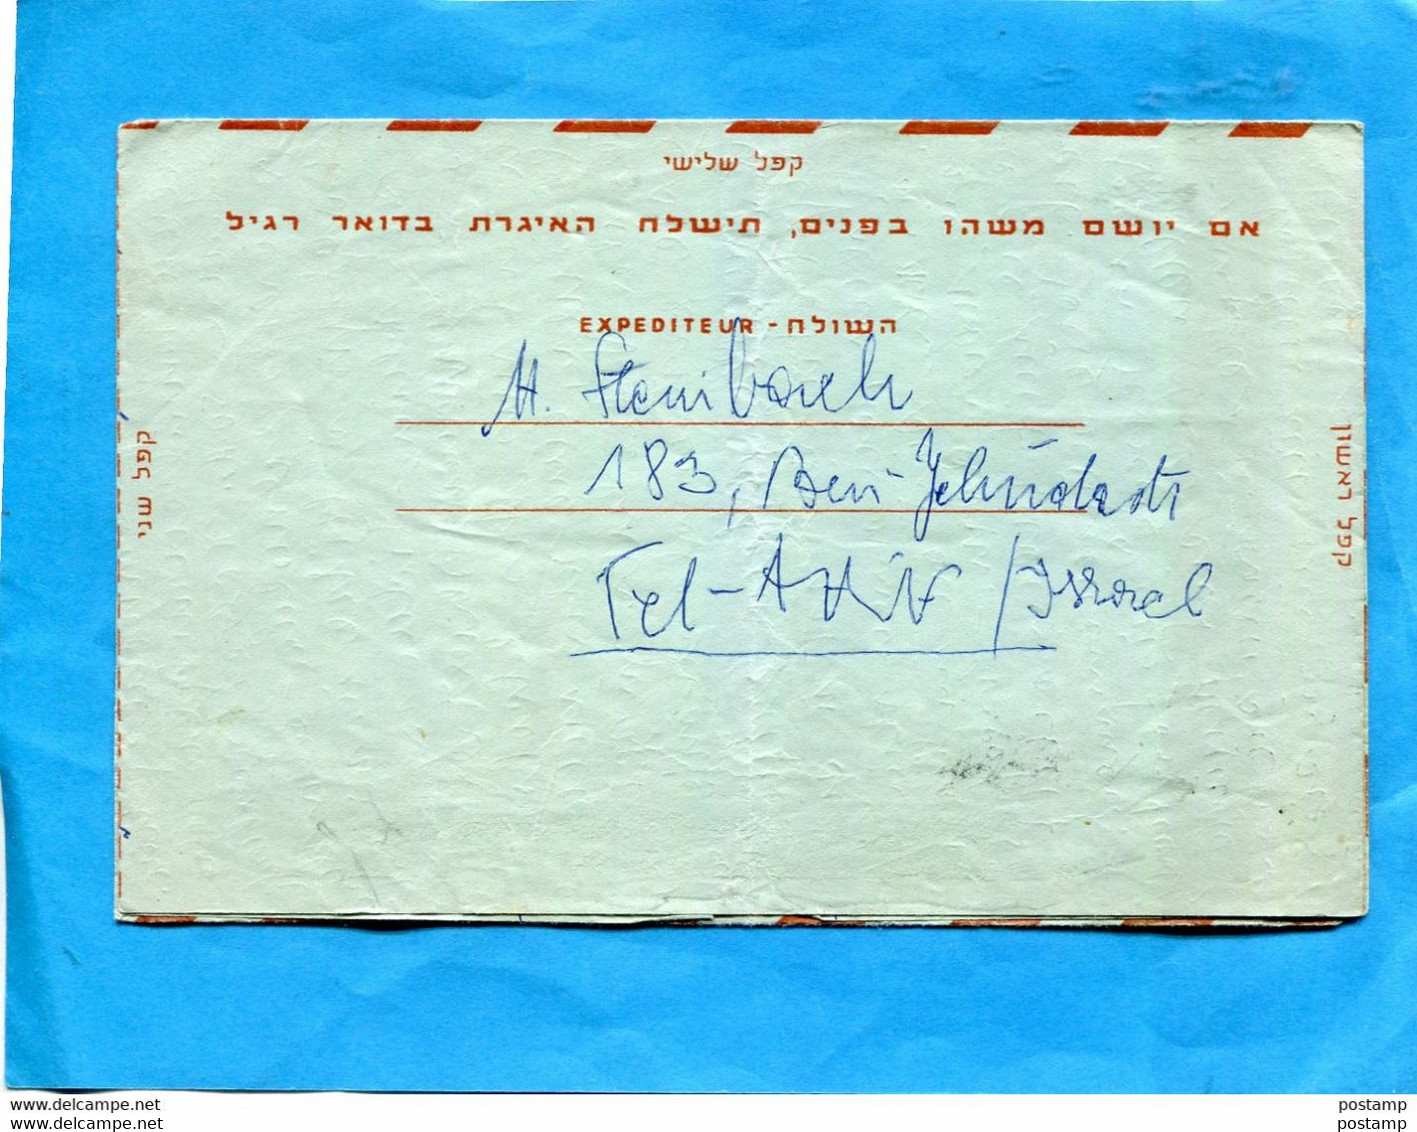 ISRAEL-AEROGRAMME- -entier  Postal Entier Postal Stationery -150 Biche+2stamps+stabs Complément Aff>France 1958 - Aéreo